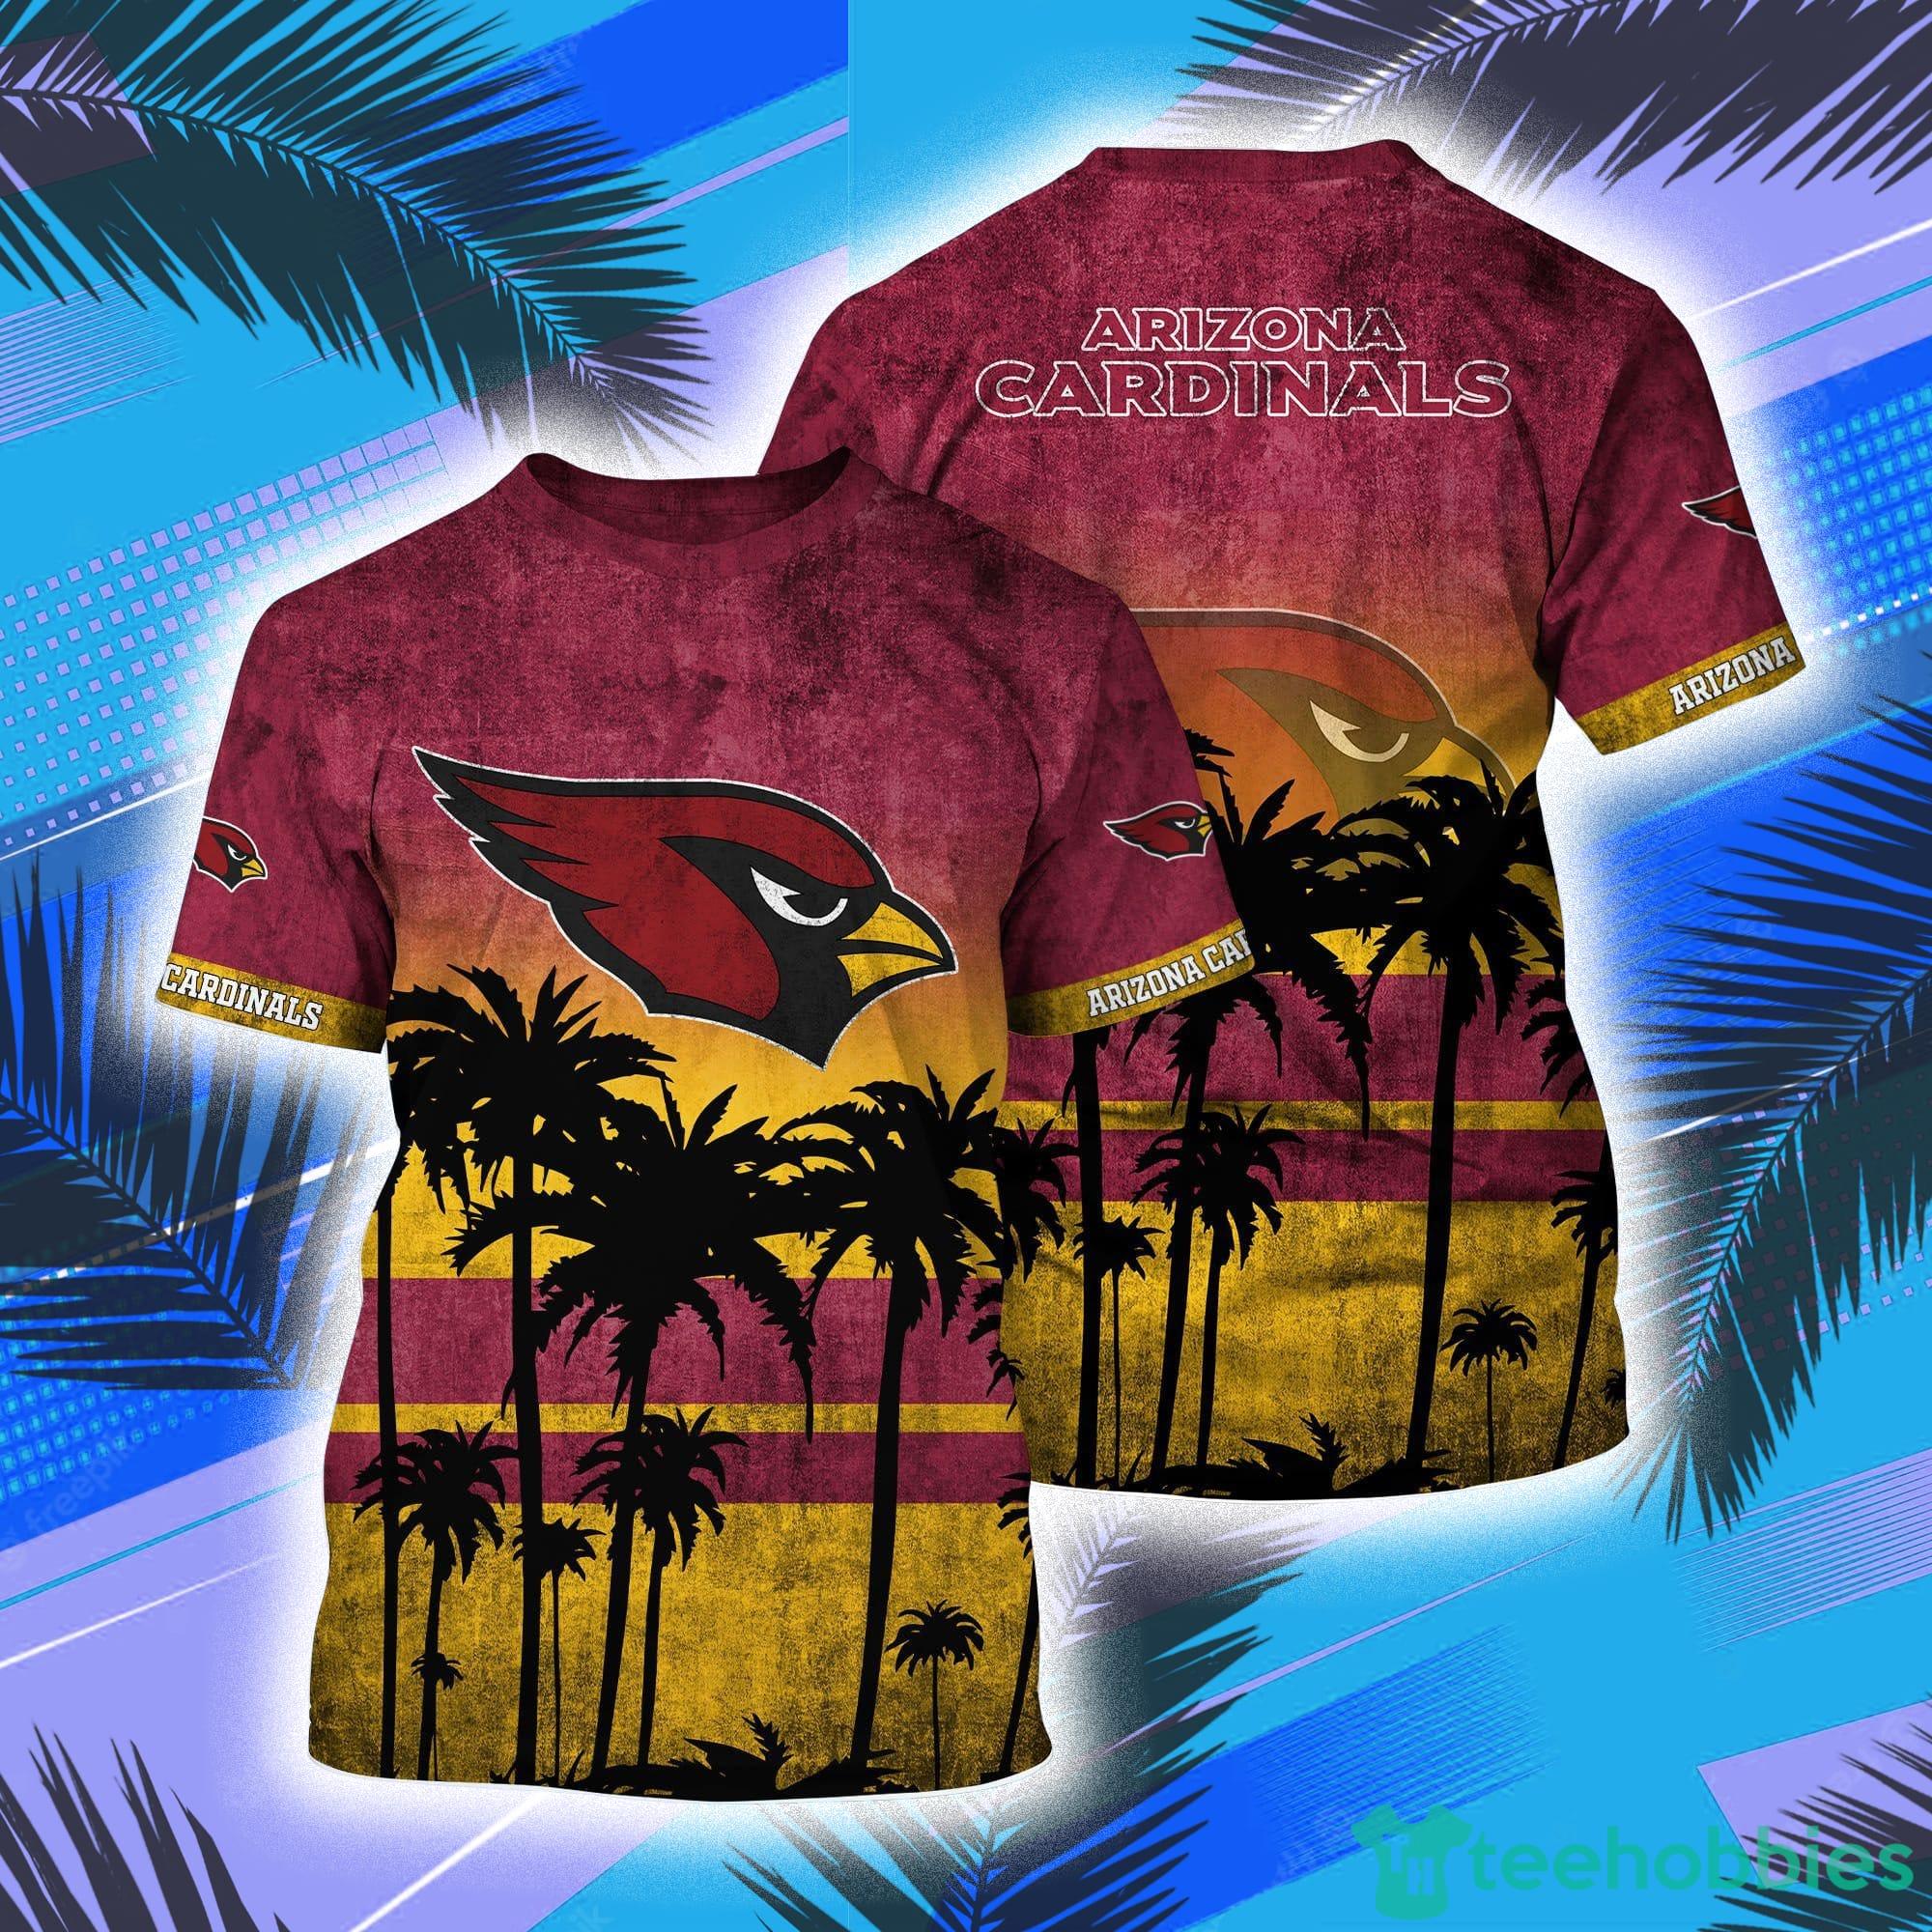 Best Gift - Personalized Arizona Cardinals Professional 3D Black Shirt